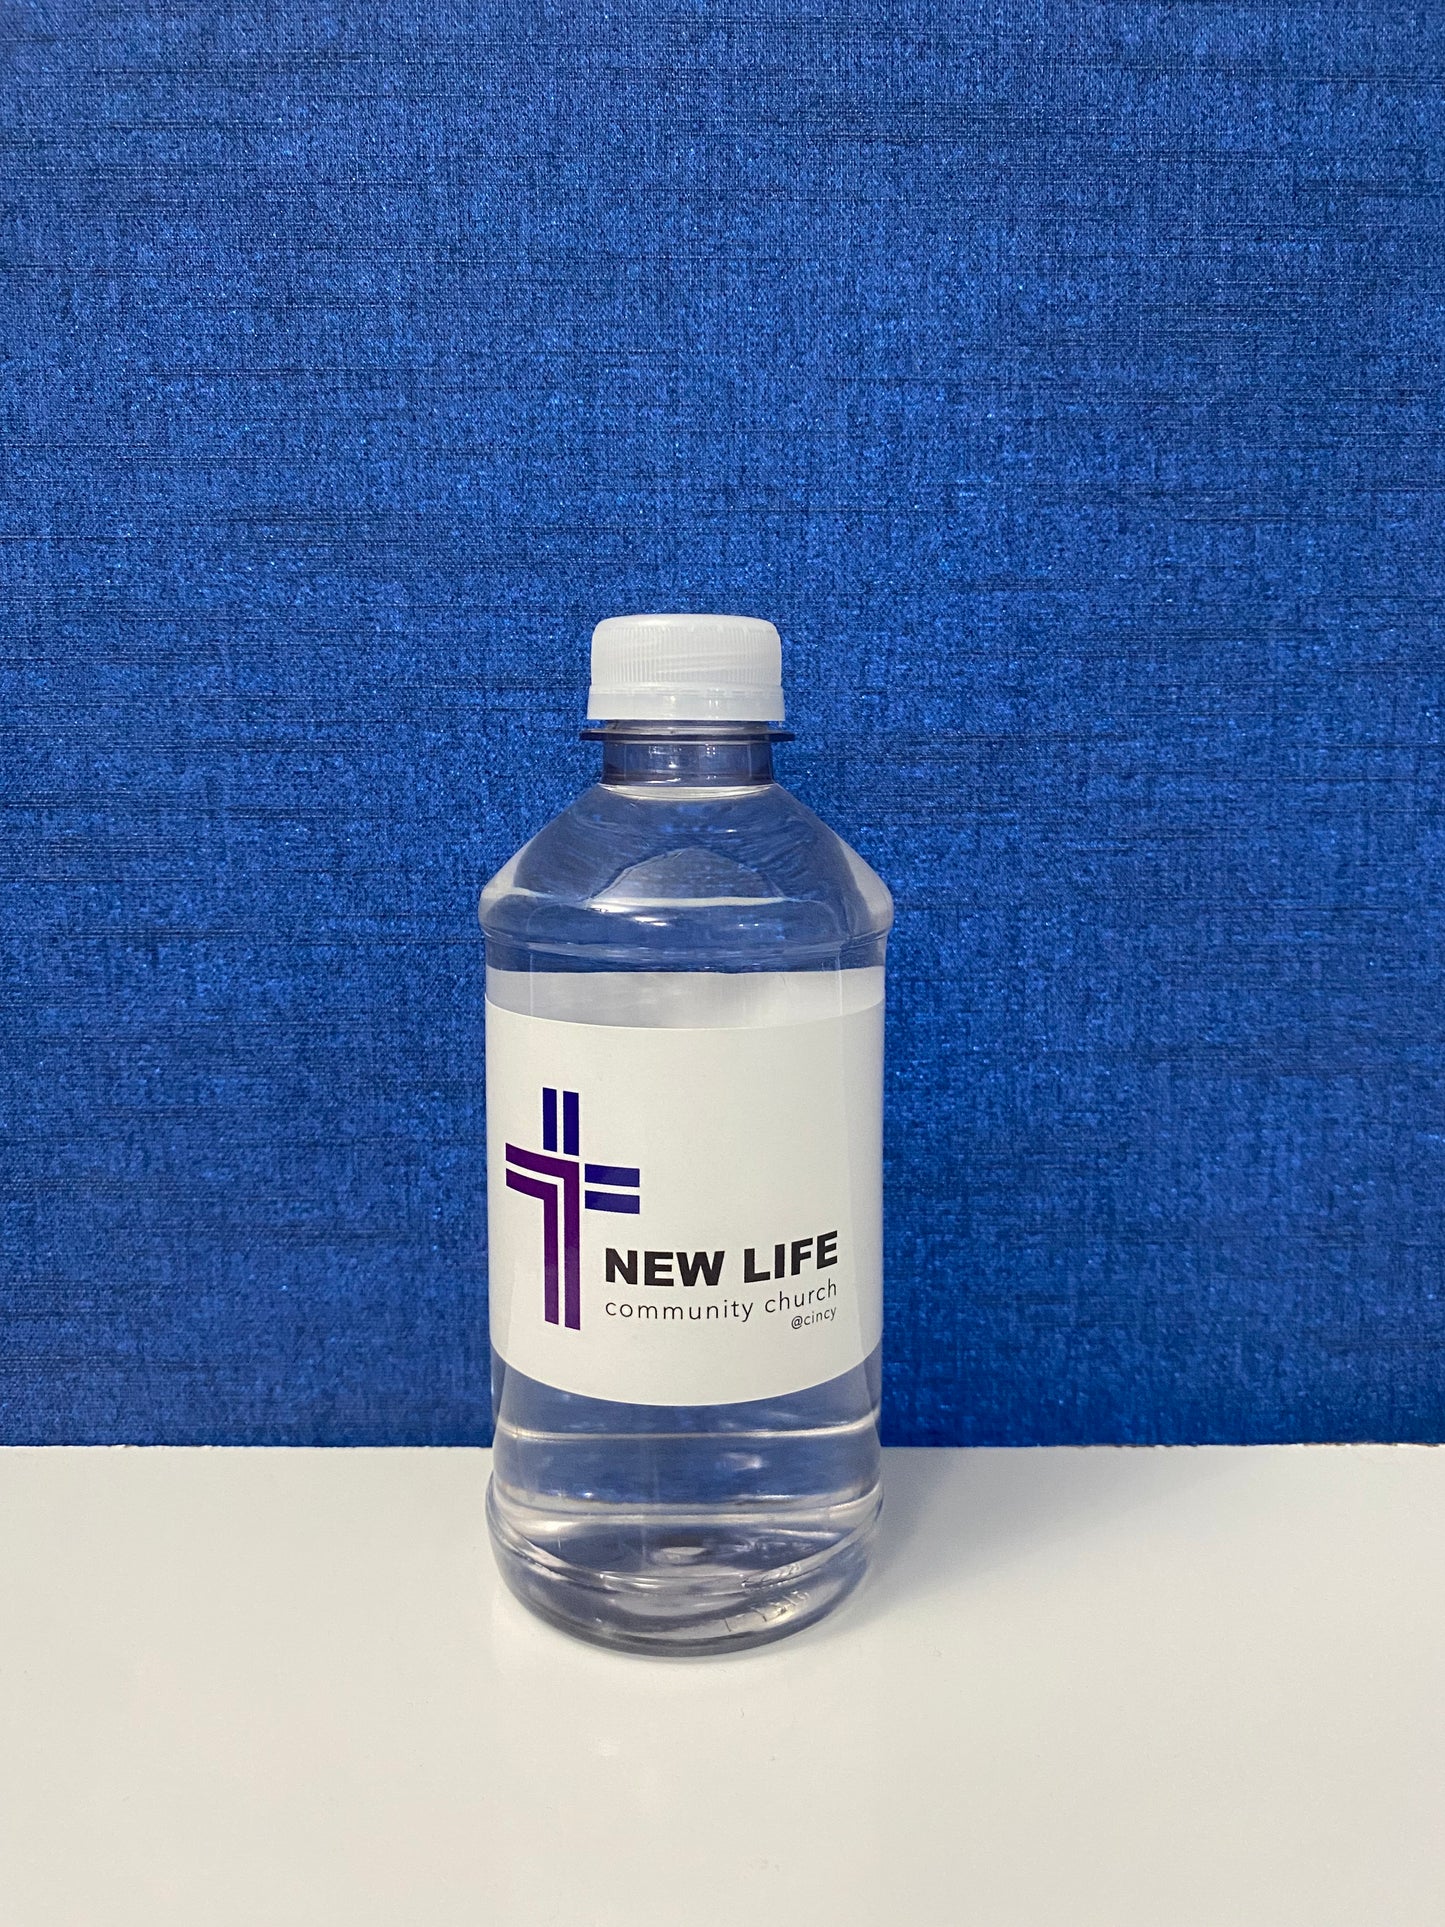 Custom Flat Cap 8 oz Company Logo Printed Bottled Water